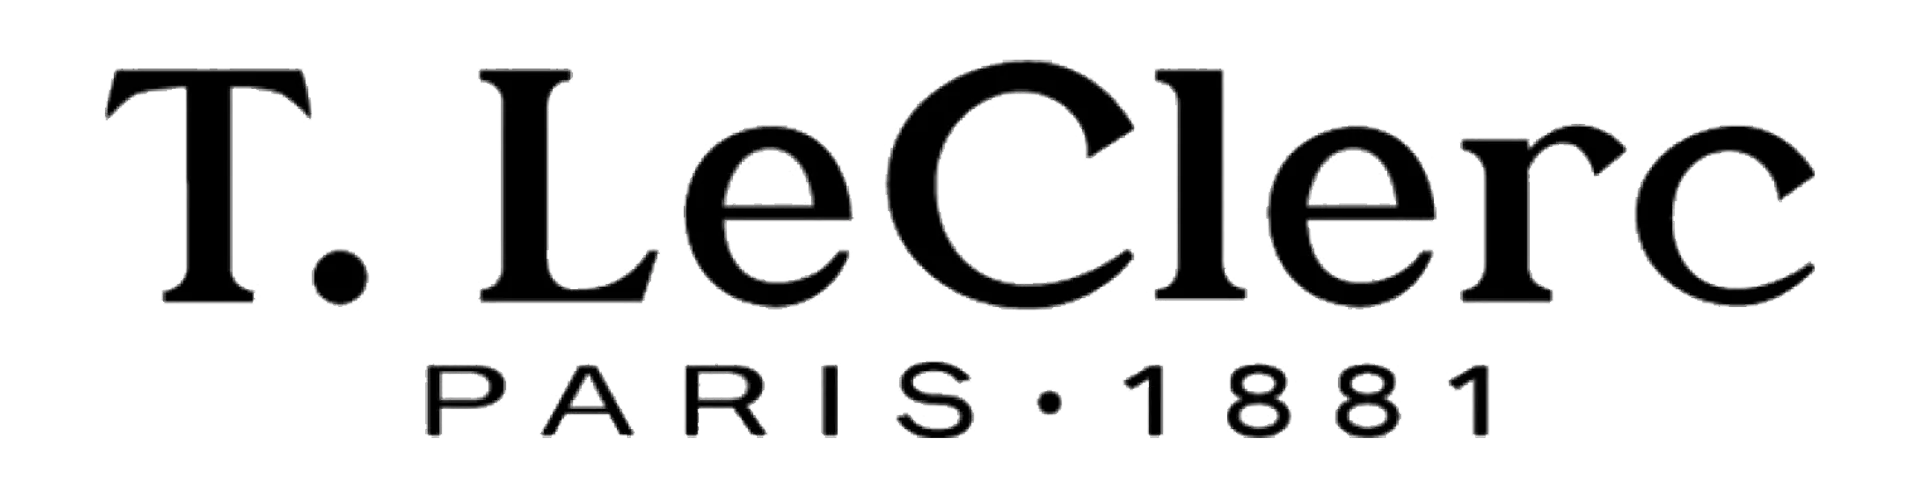 LECLERC CAMERA logo de circulaires